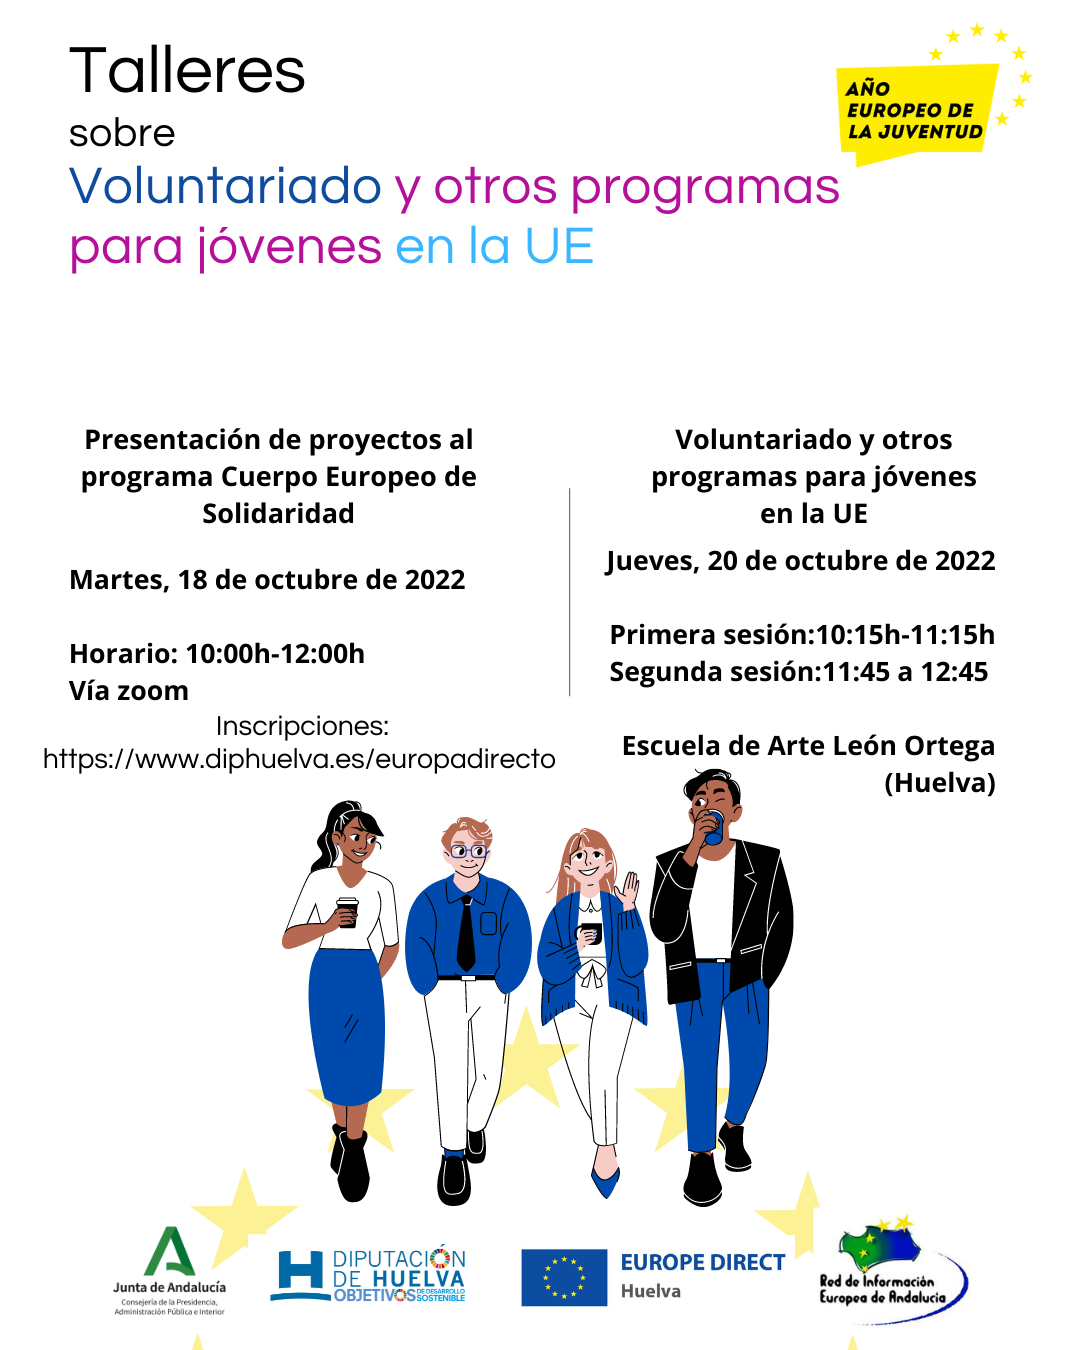 Jueves, 20 de octubre de 2022 Horario 1000h-1200h Escuela de Arte León Ortega